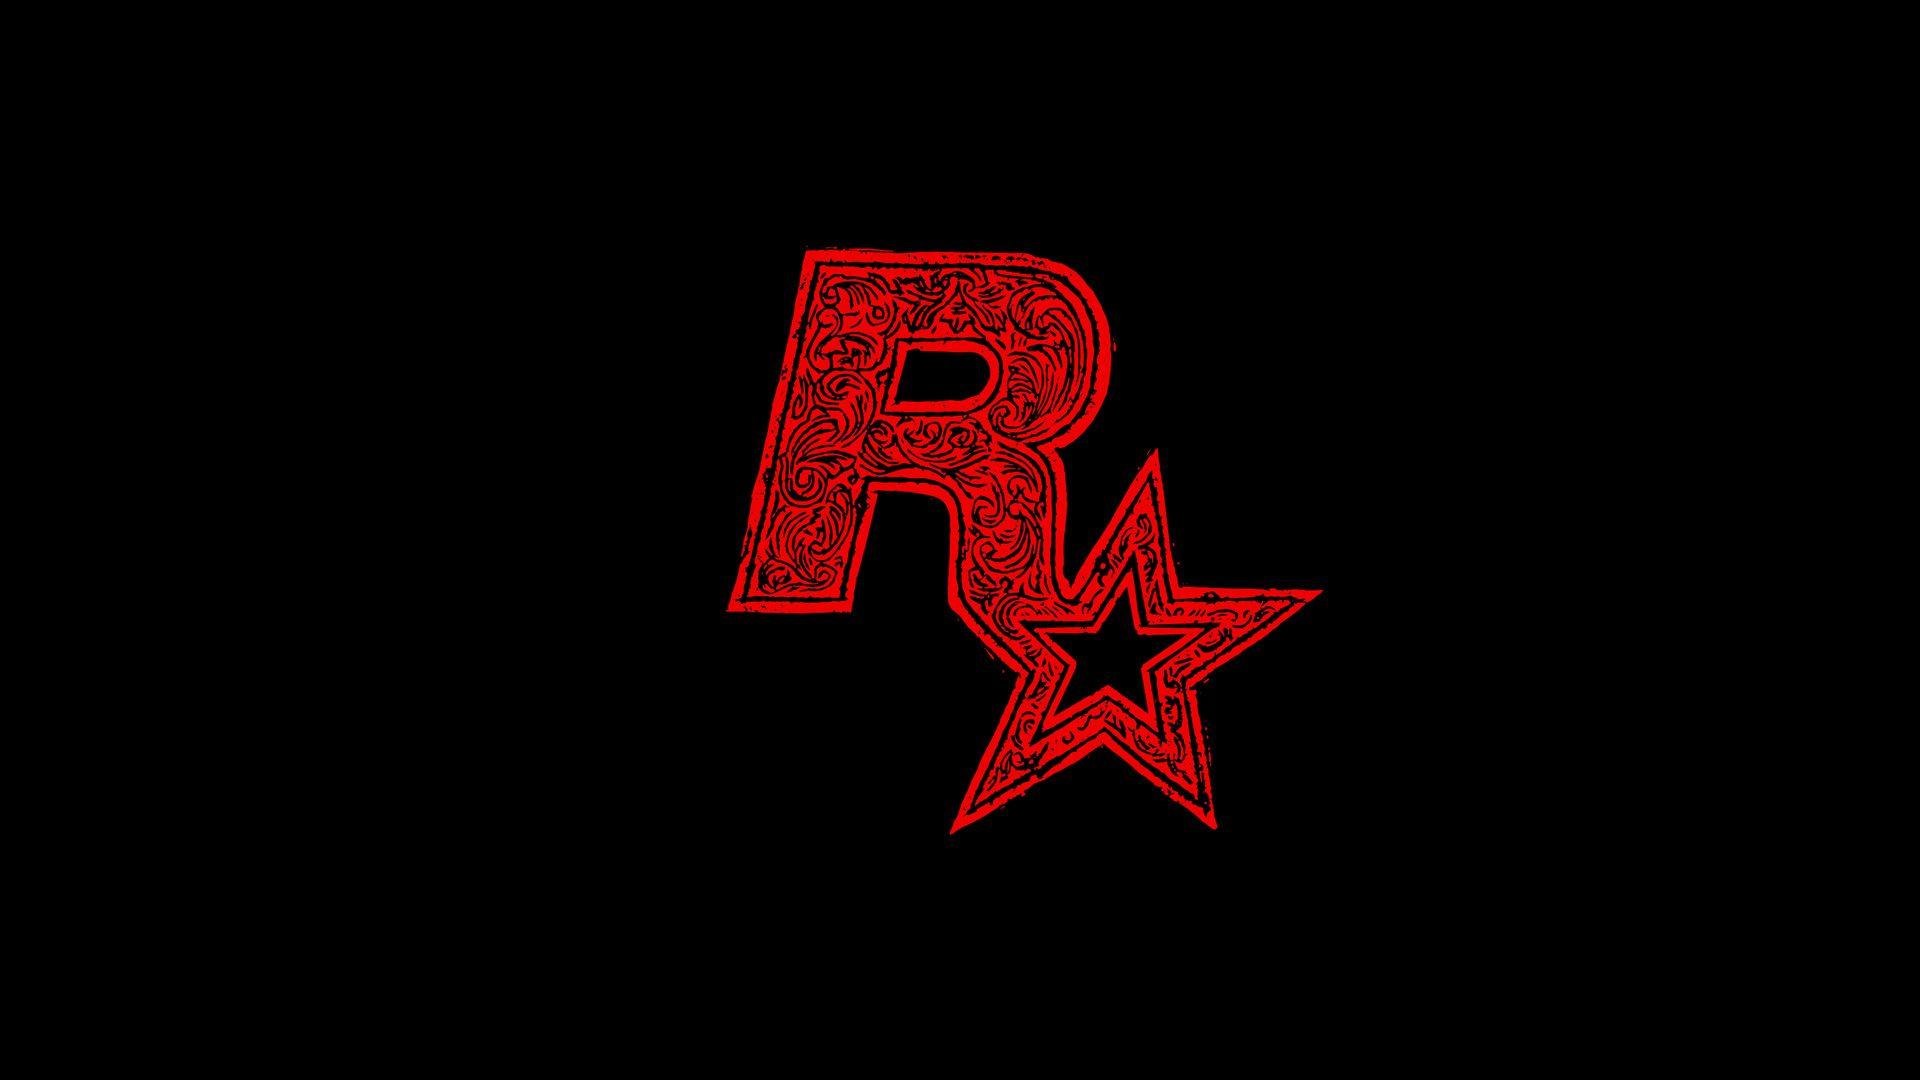 beamng drive logo rockstar logo